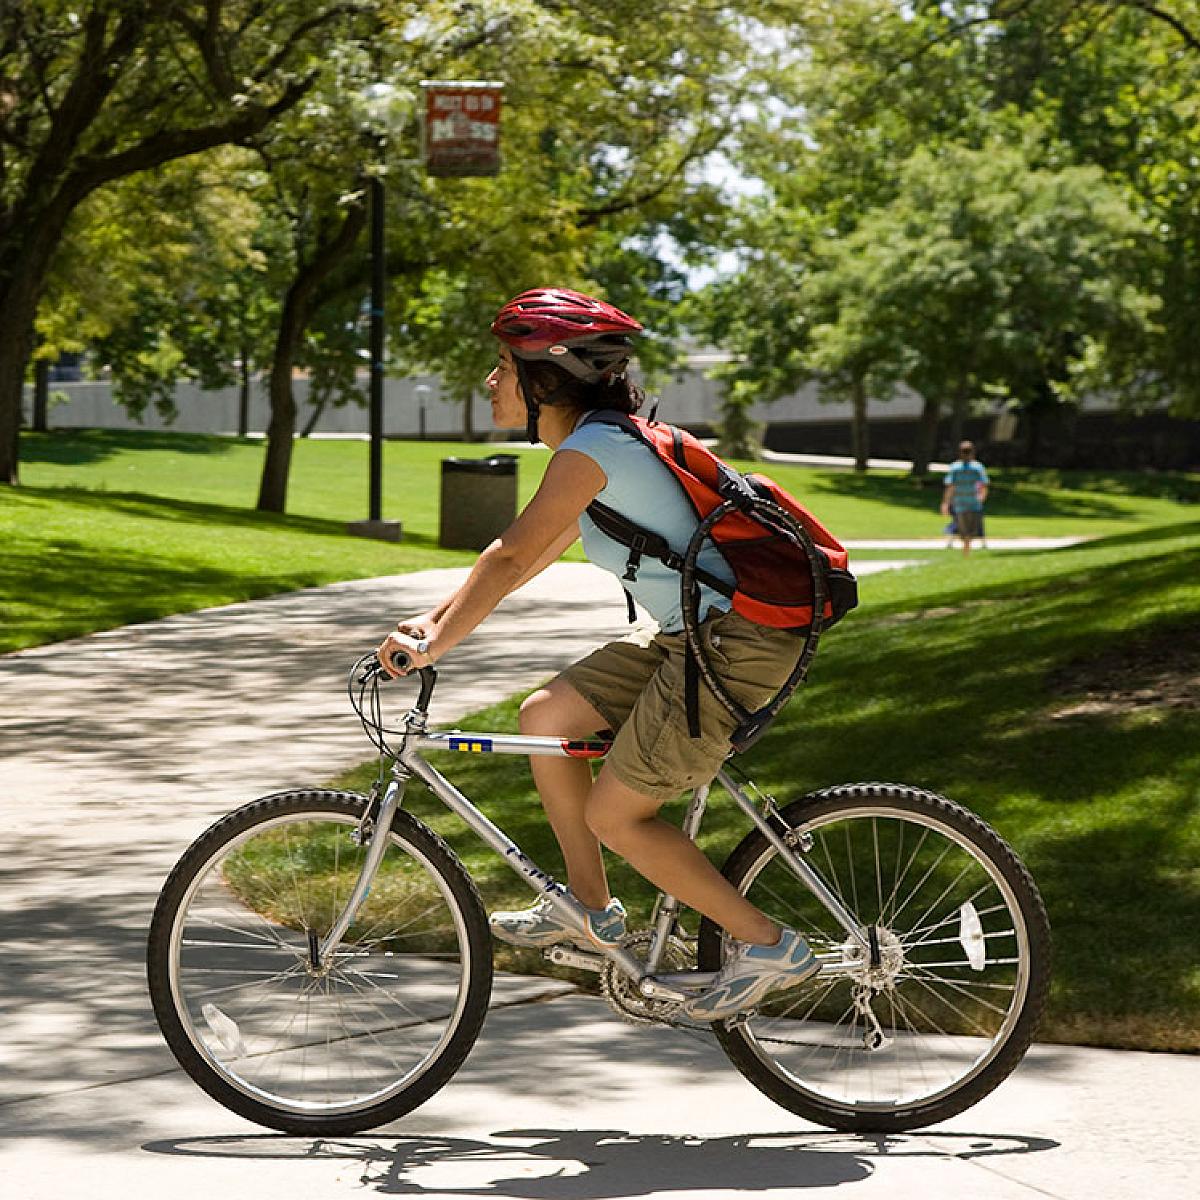 Student on a bike rides across U of U campus.